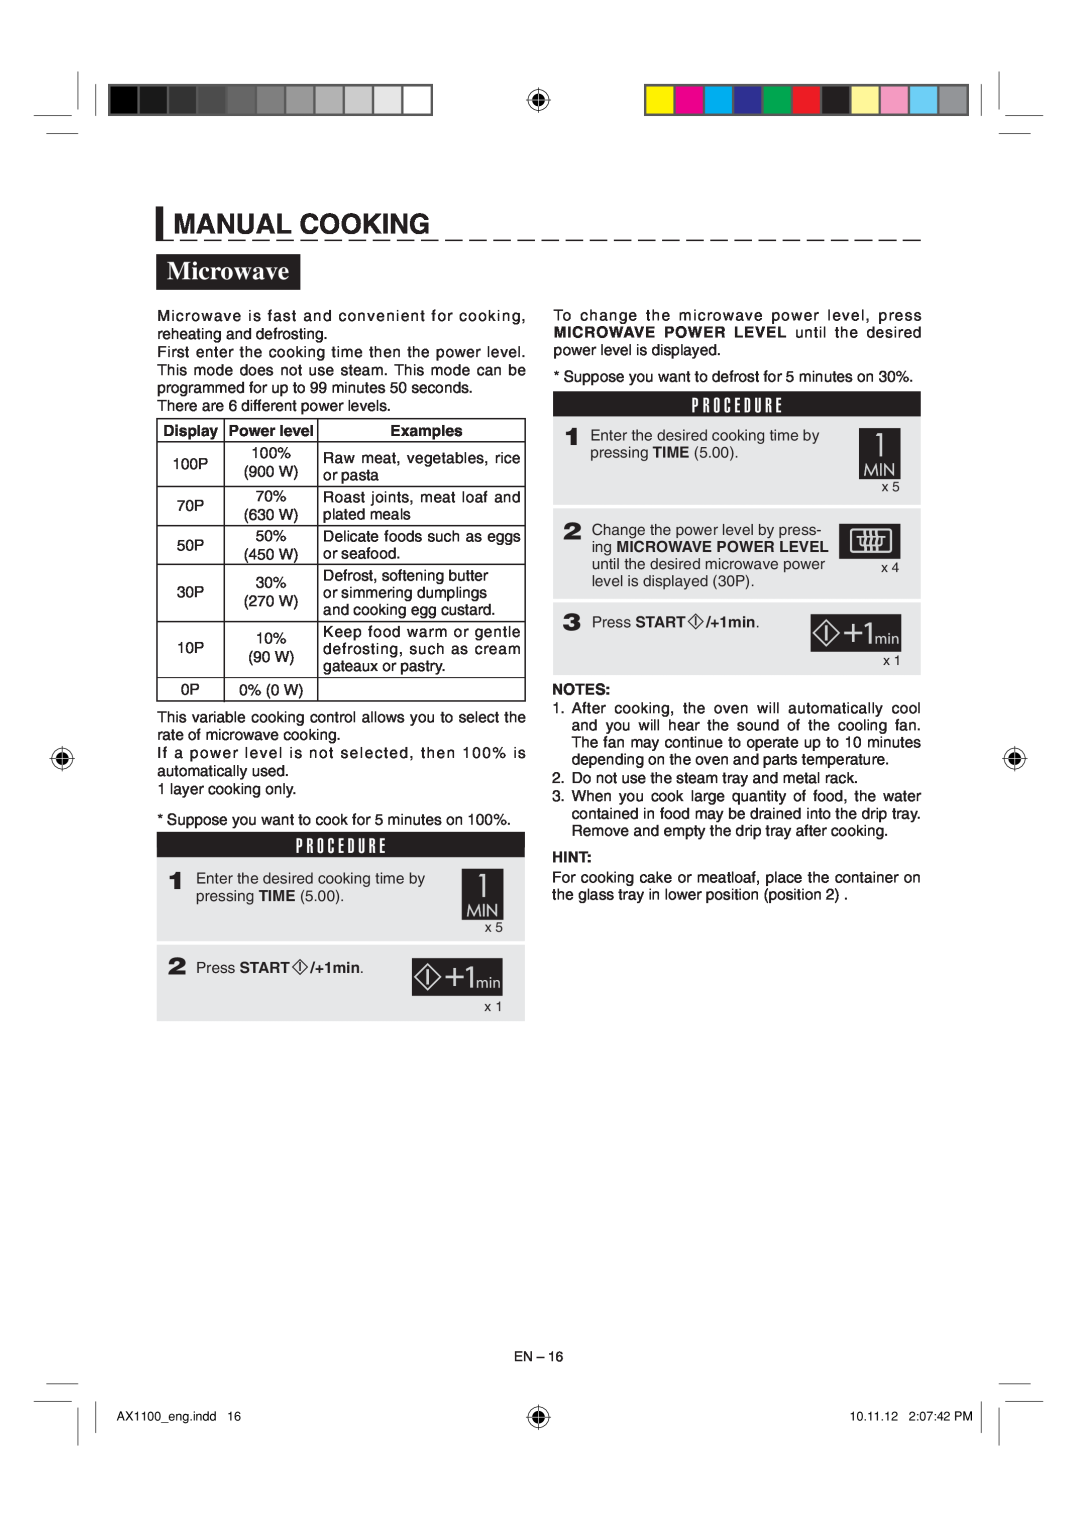 Sharp AX-1100 operation manual Microwave, Manual Cooking, P R O C E D U R E, Display, Examples, Press START/+1min, Hint 